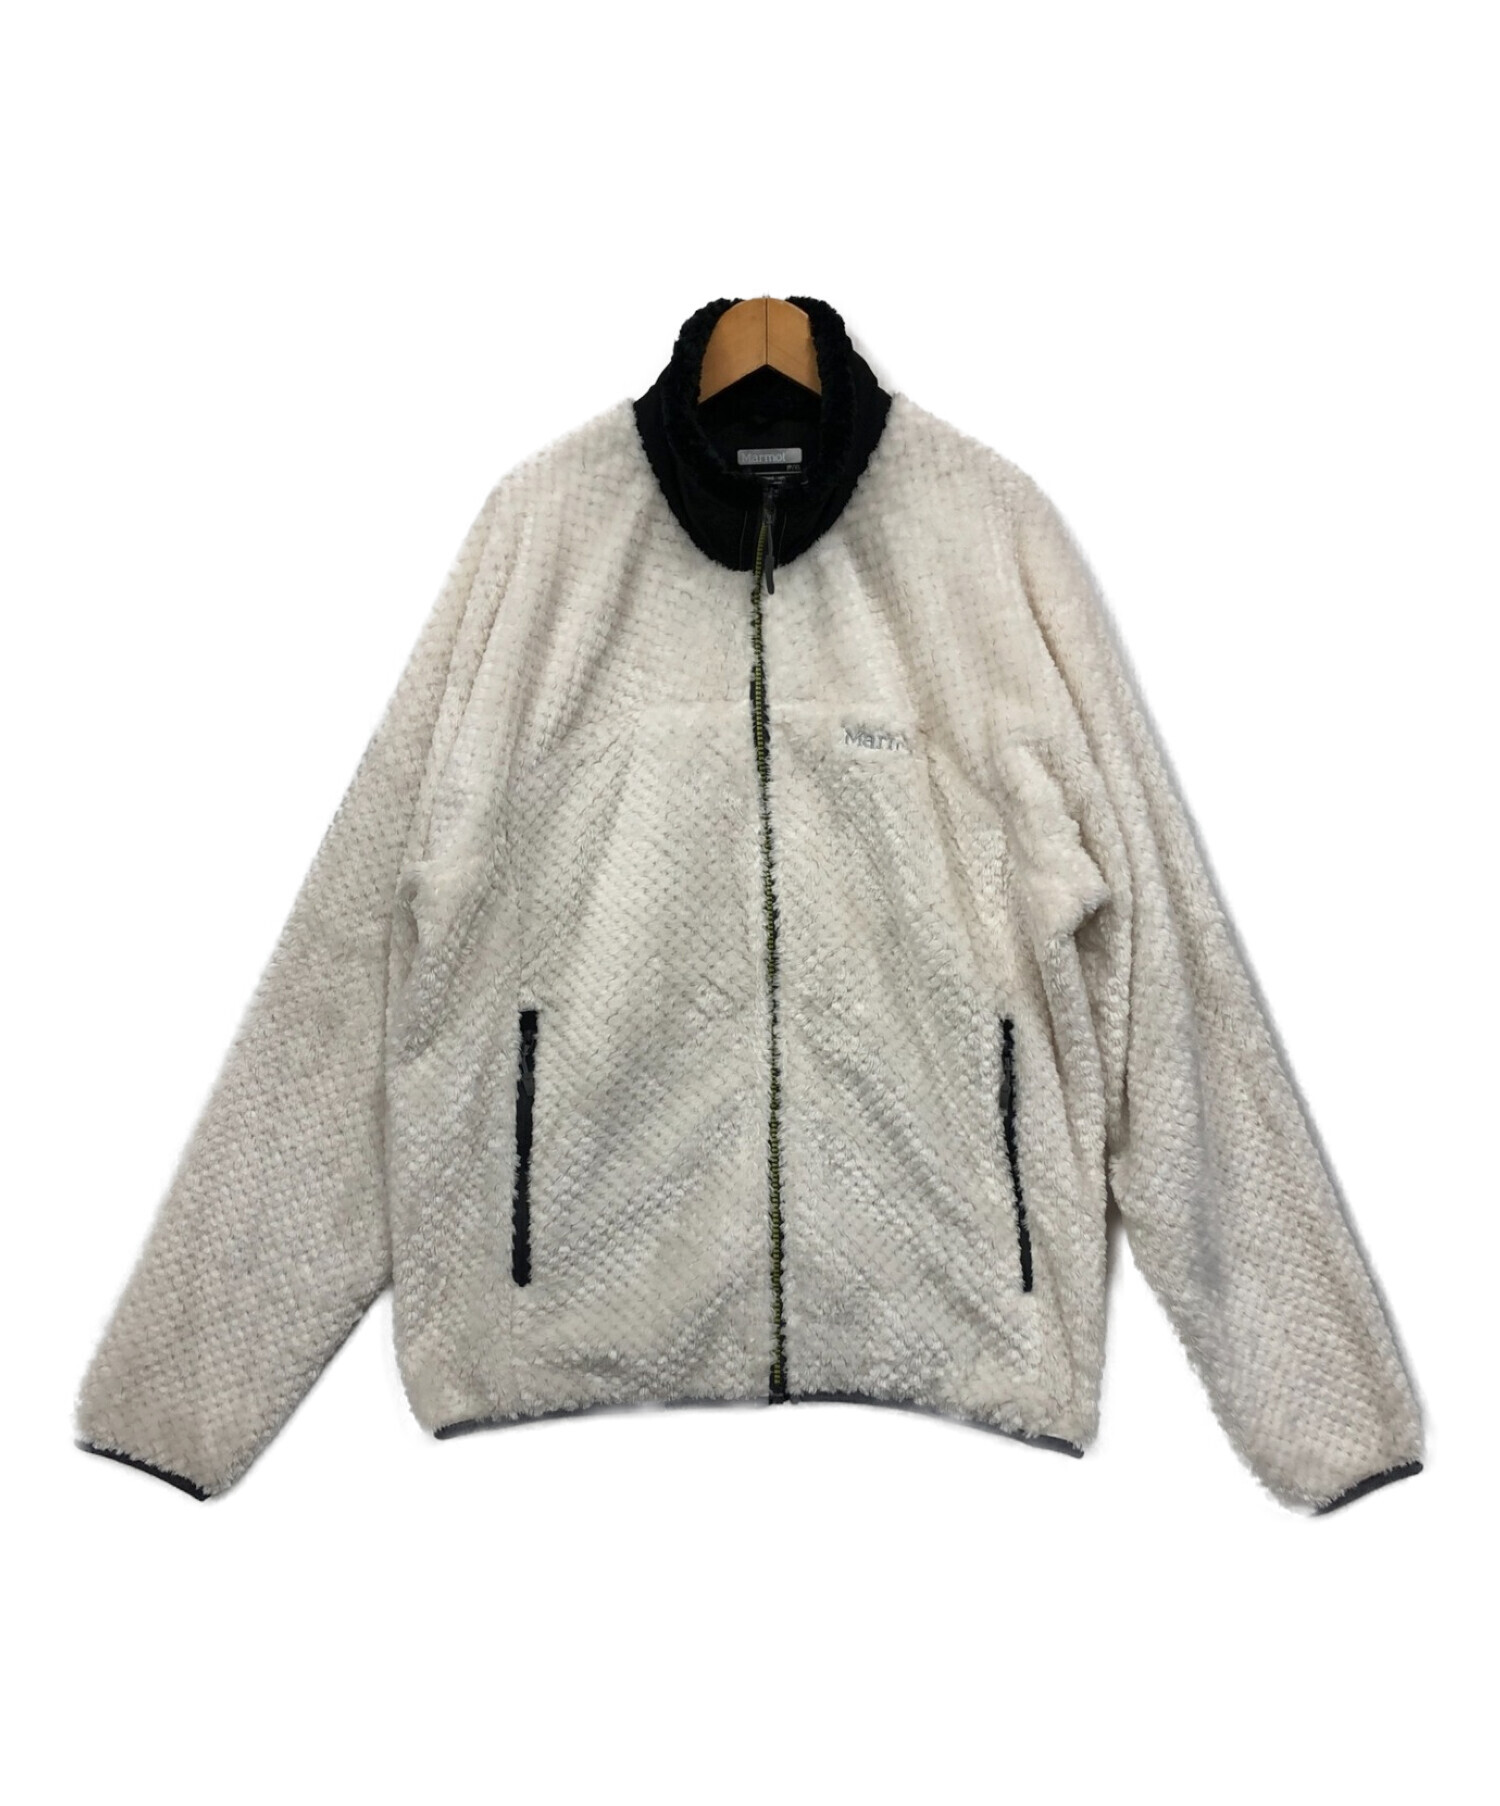 MARMOT (マーモット) フリースジャケット ブラック×ホワイト サイズ:XL